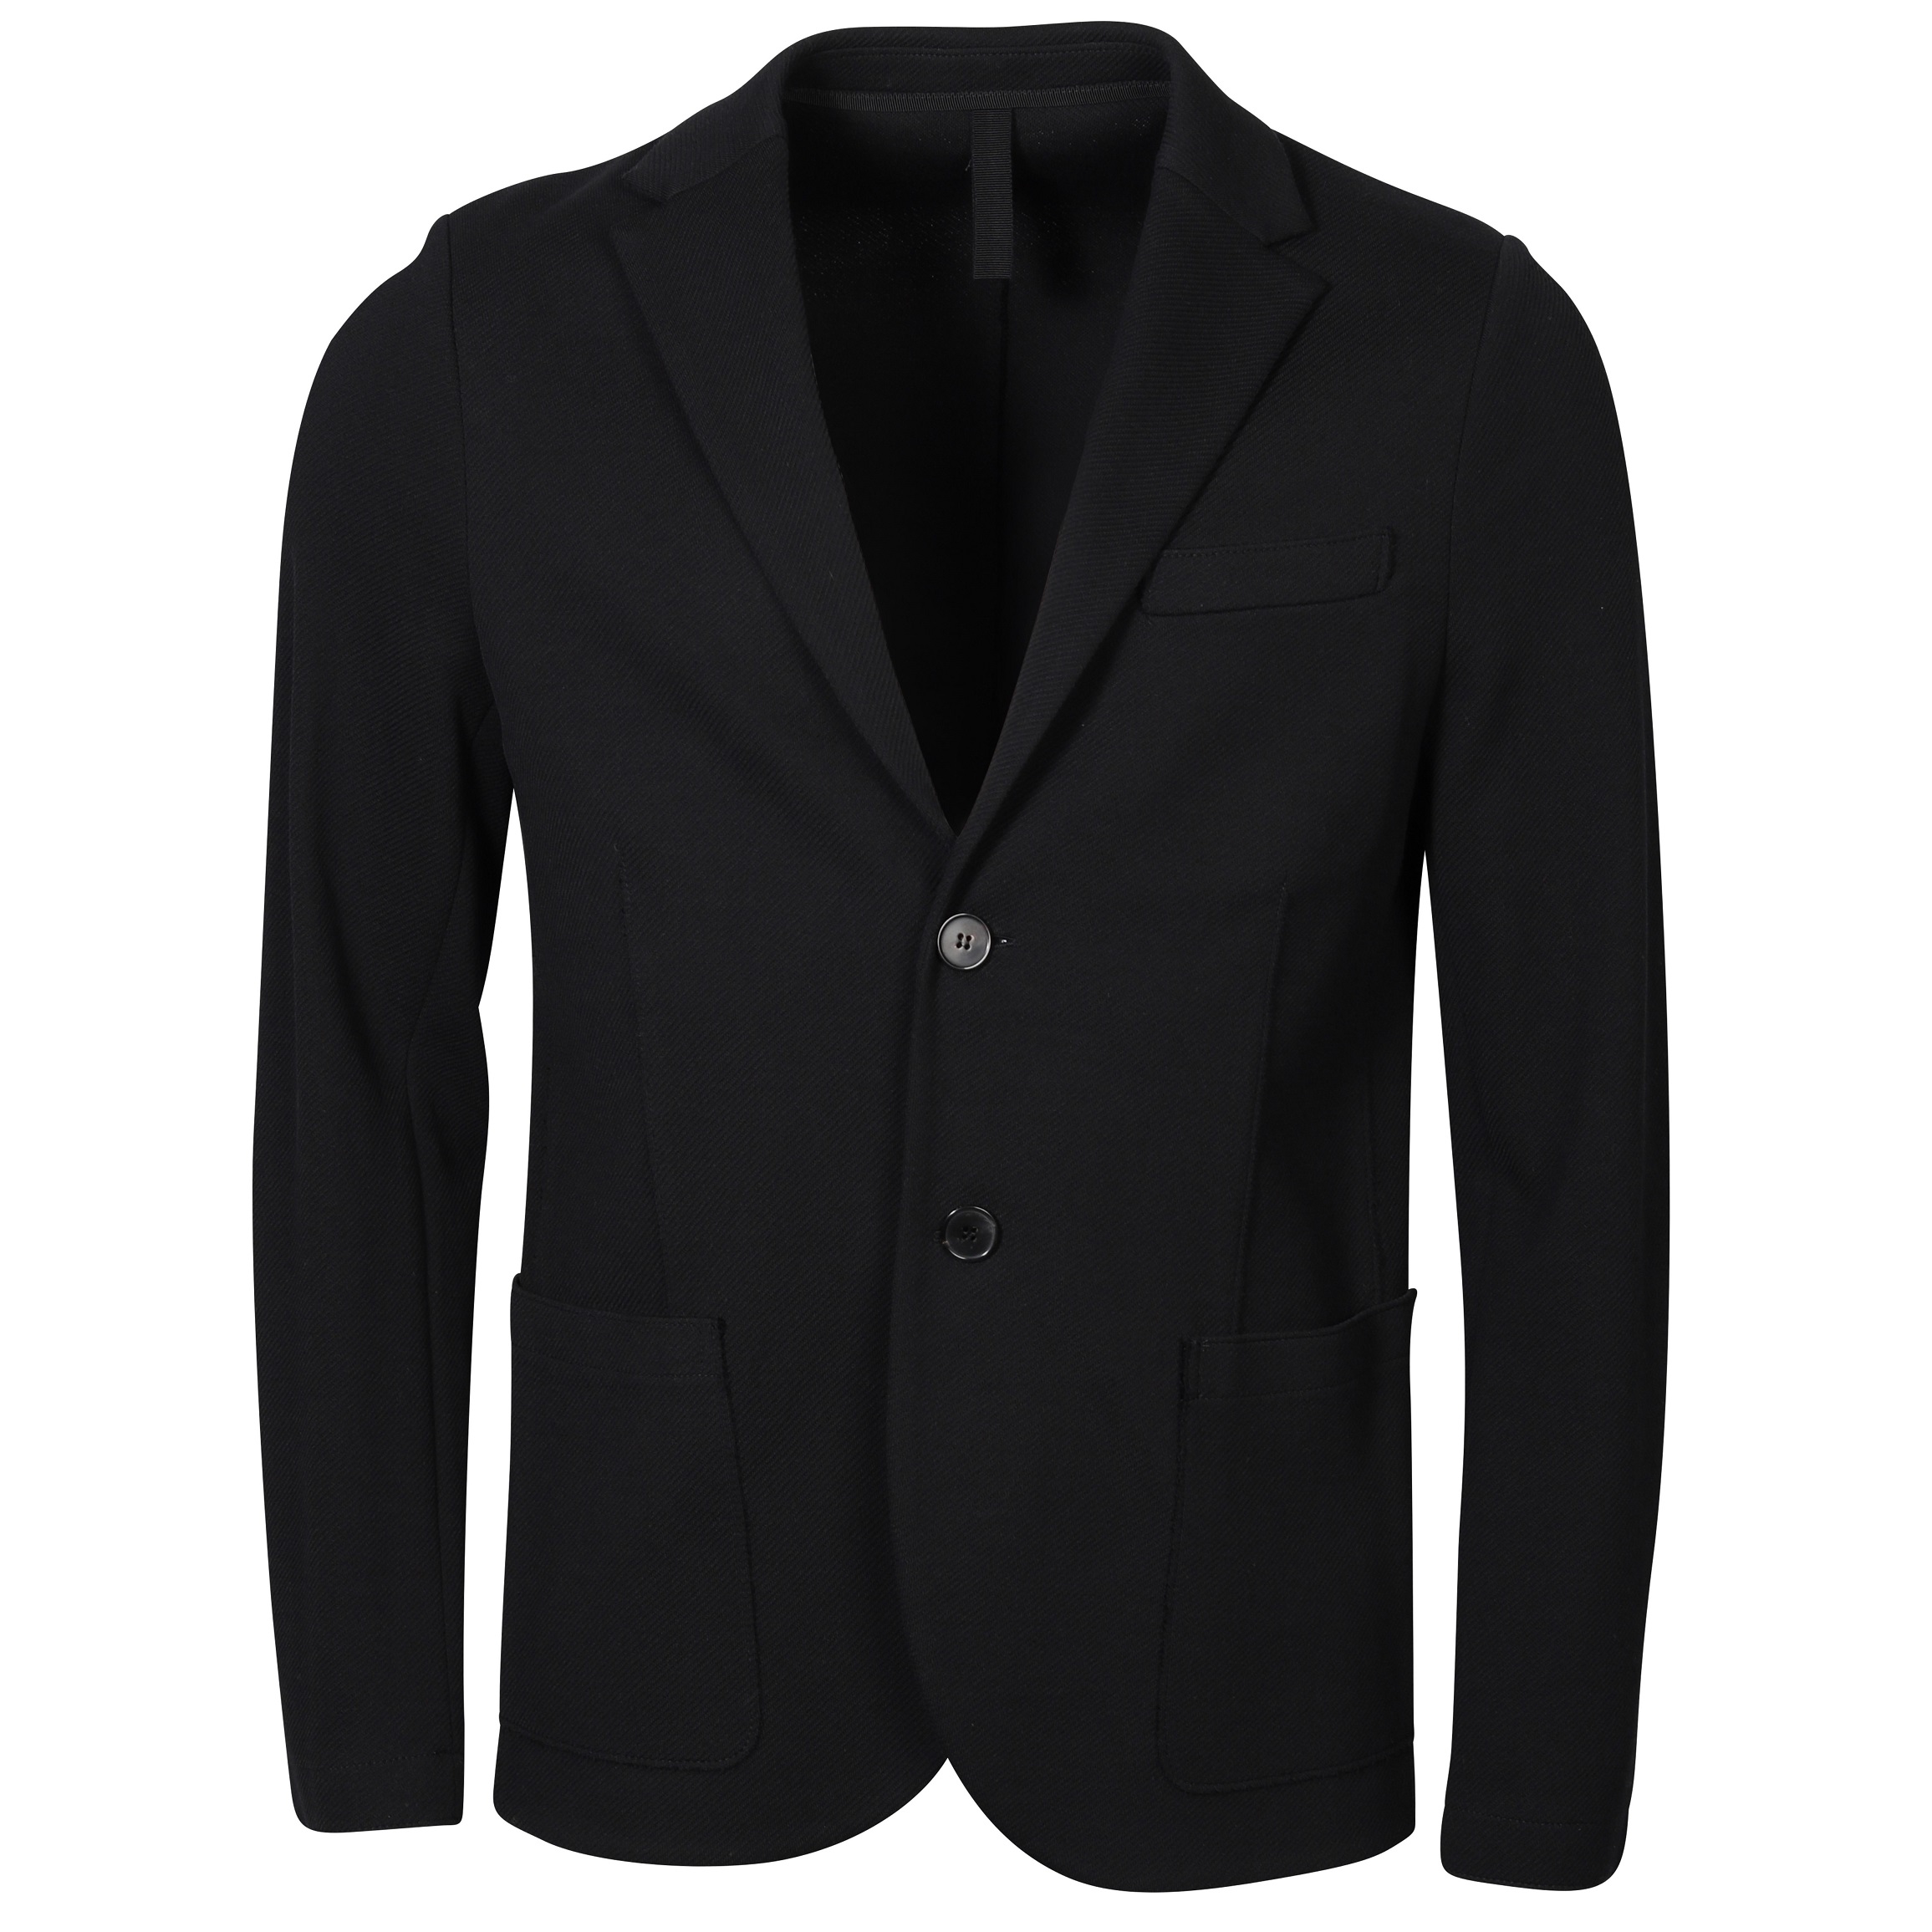 HARRIS WHARF Cotton Twill Jacket in Black 46